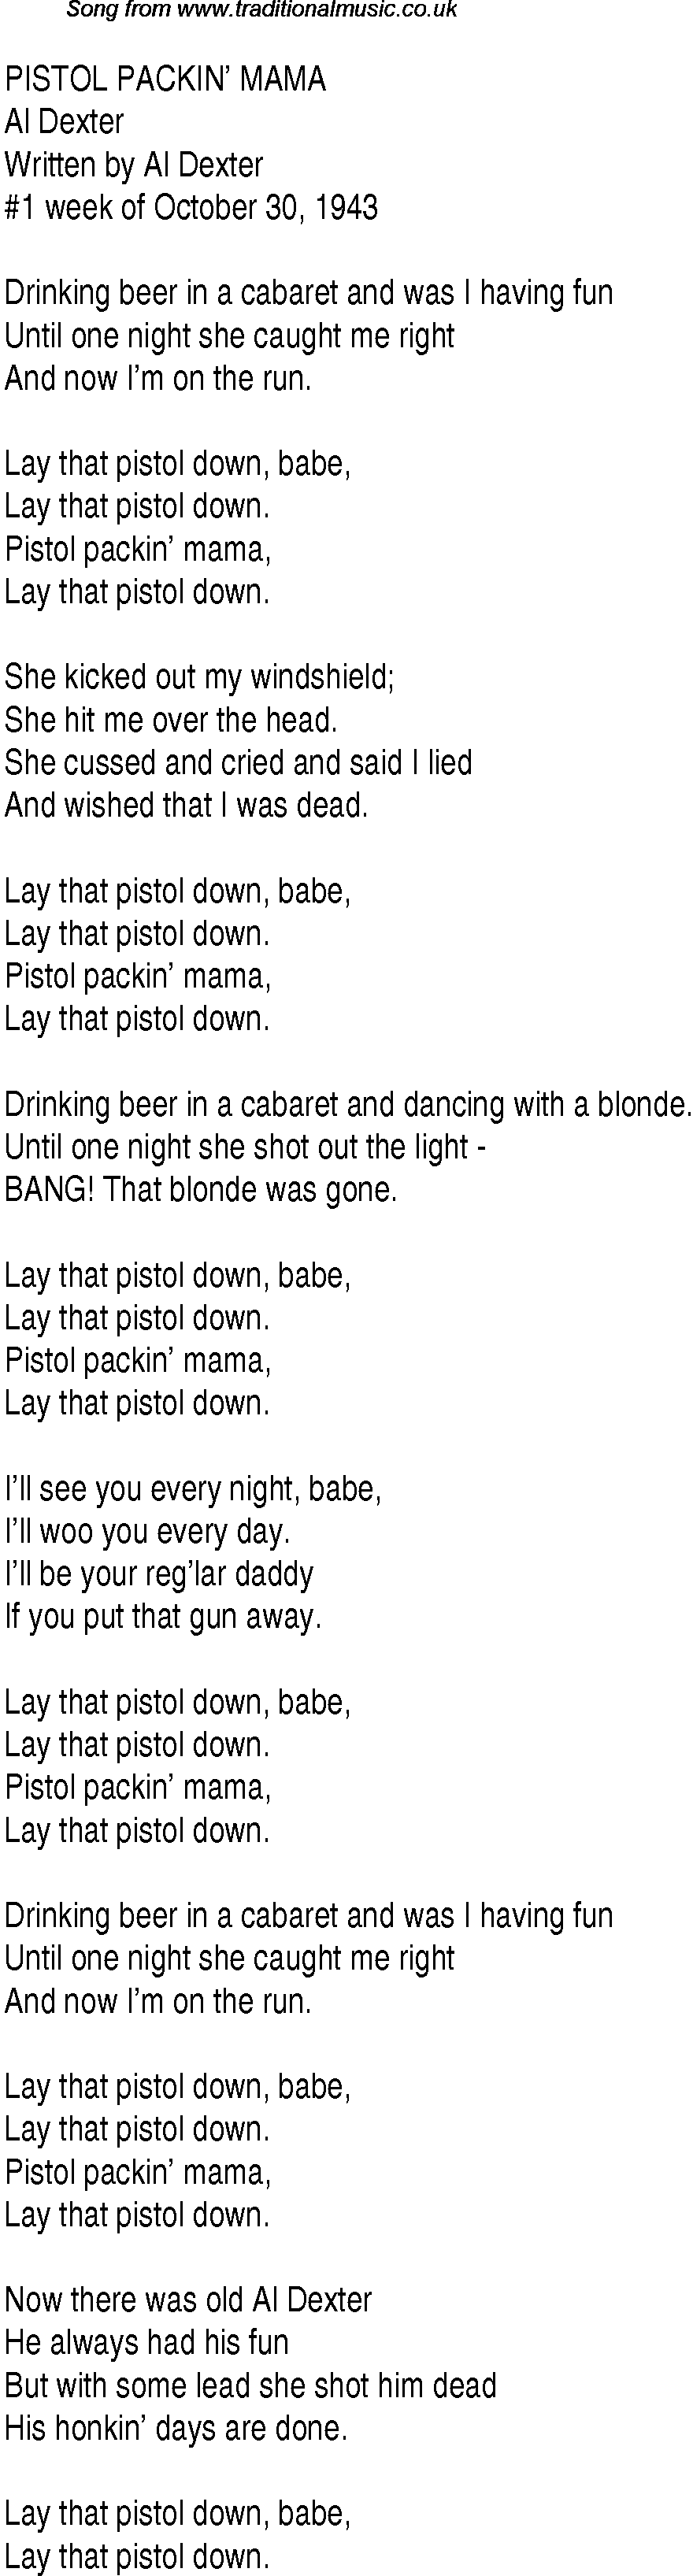 Music charts top songs 1943 - lyrics for Pistol Packin Mama